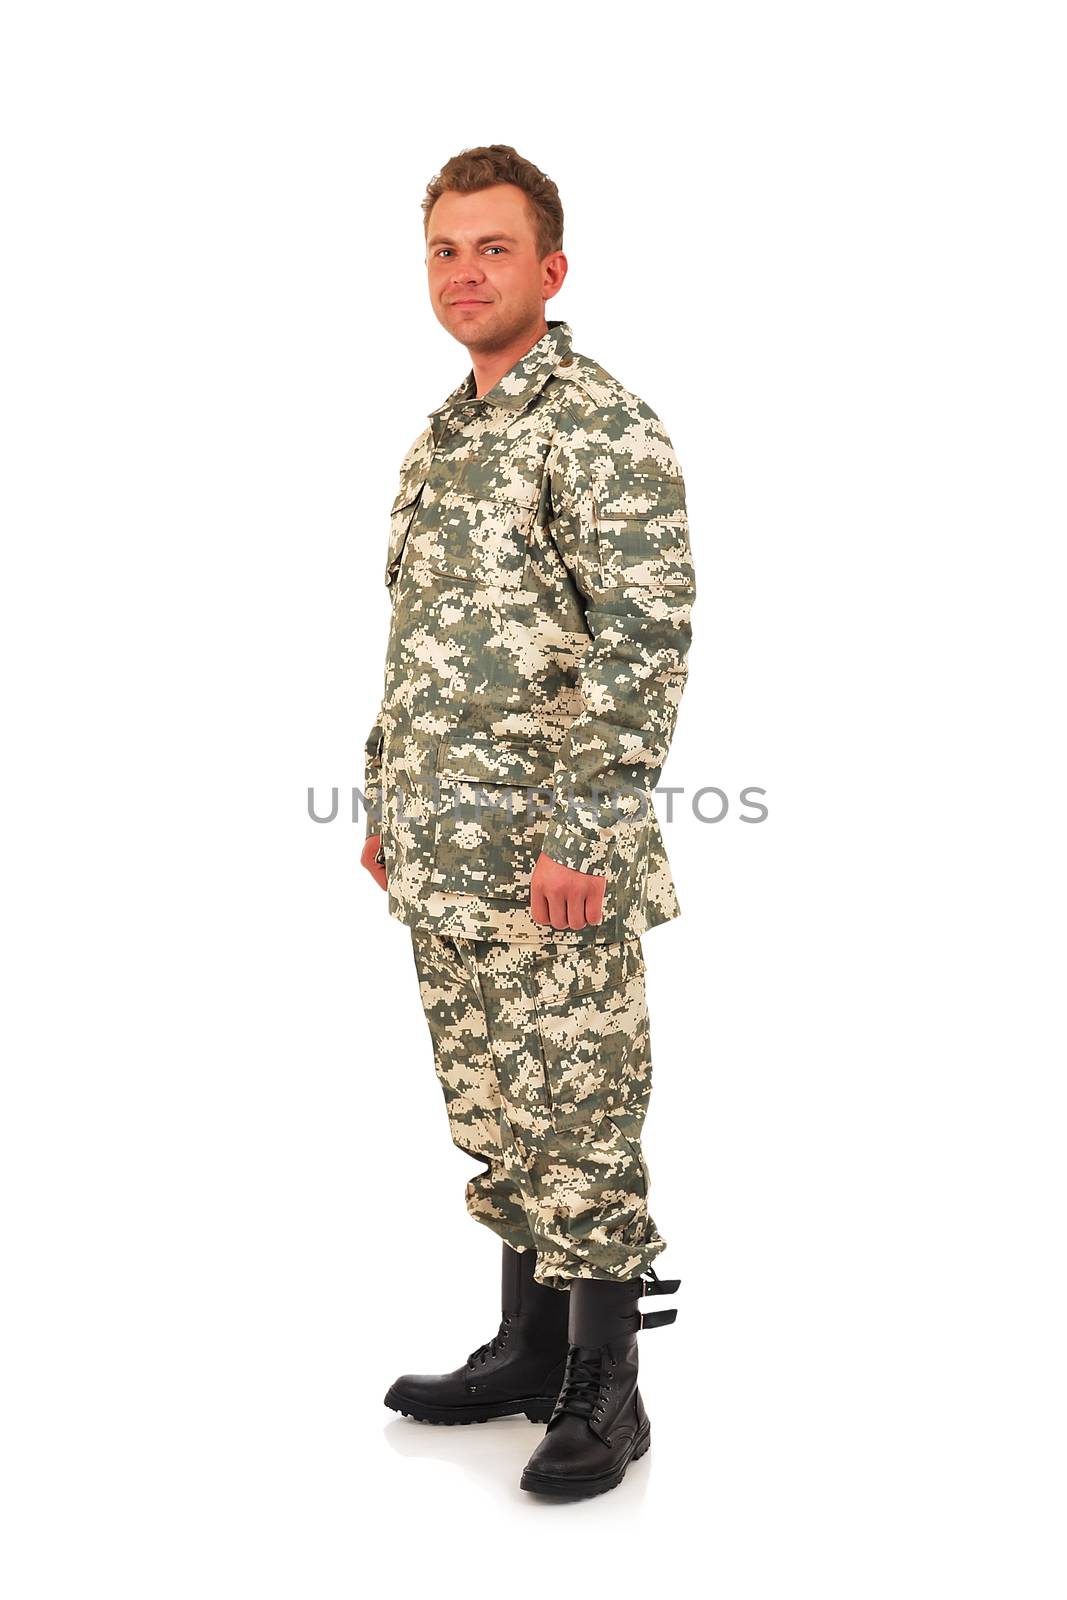 Military Man by vetkit